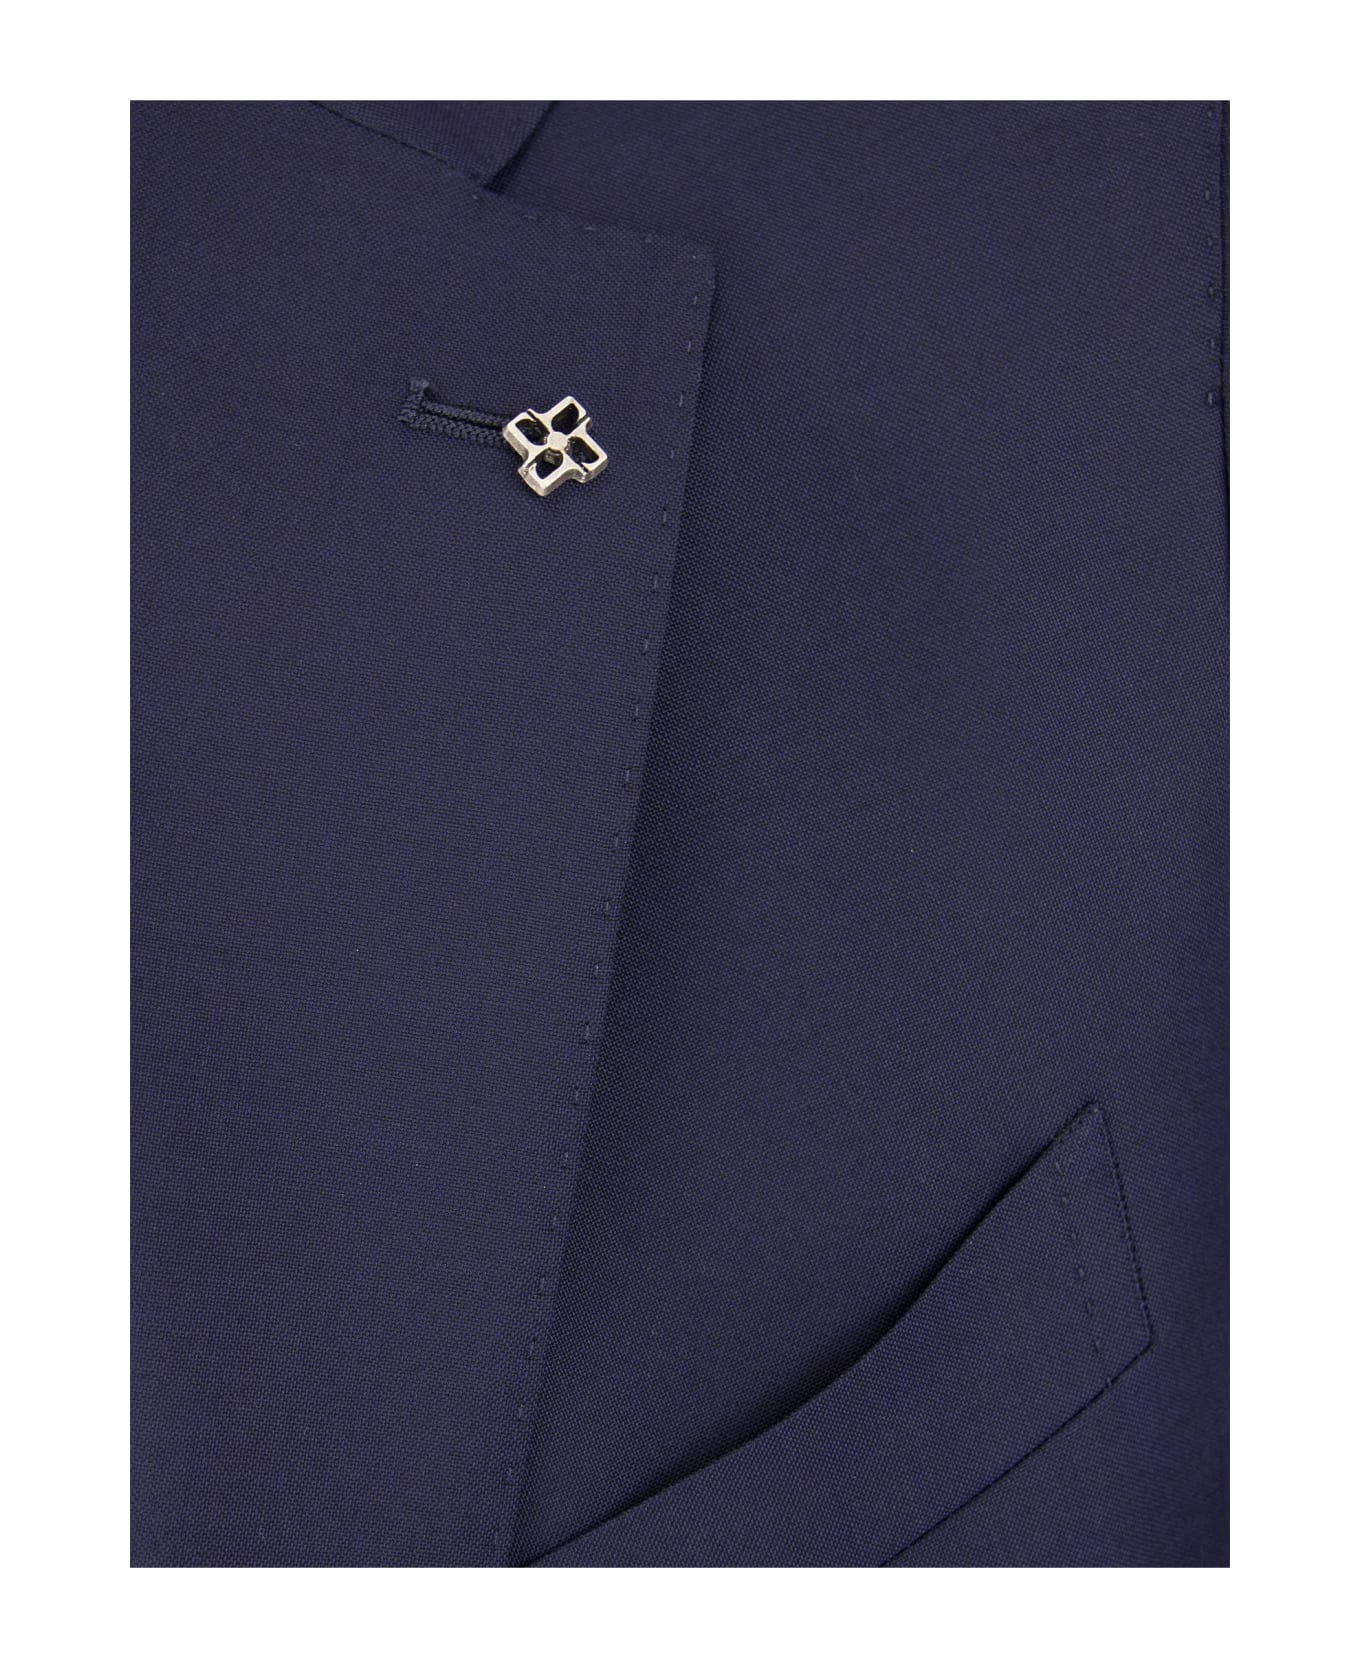 Tagliatore Wool Suit - Navy Blue